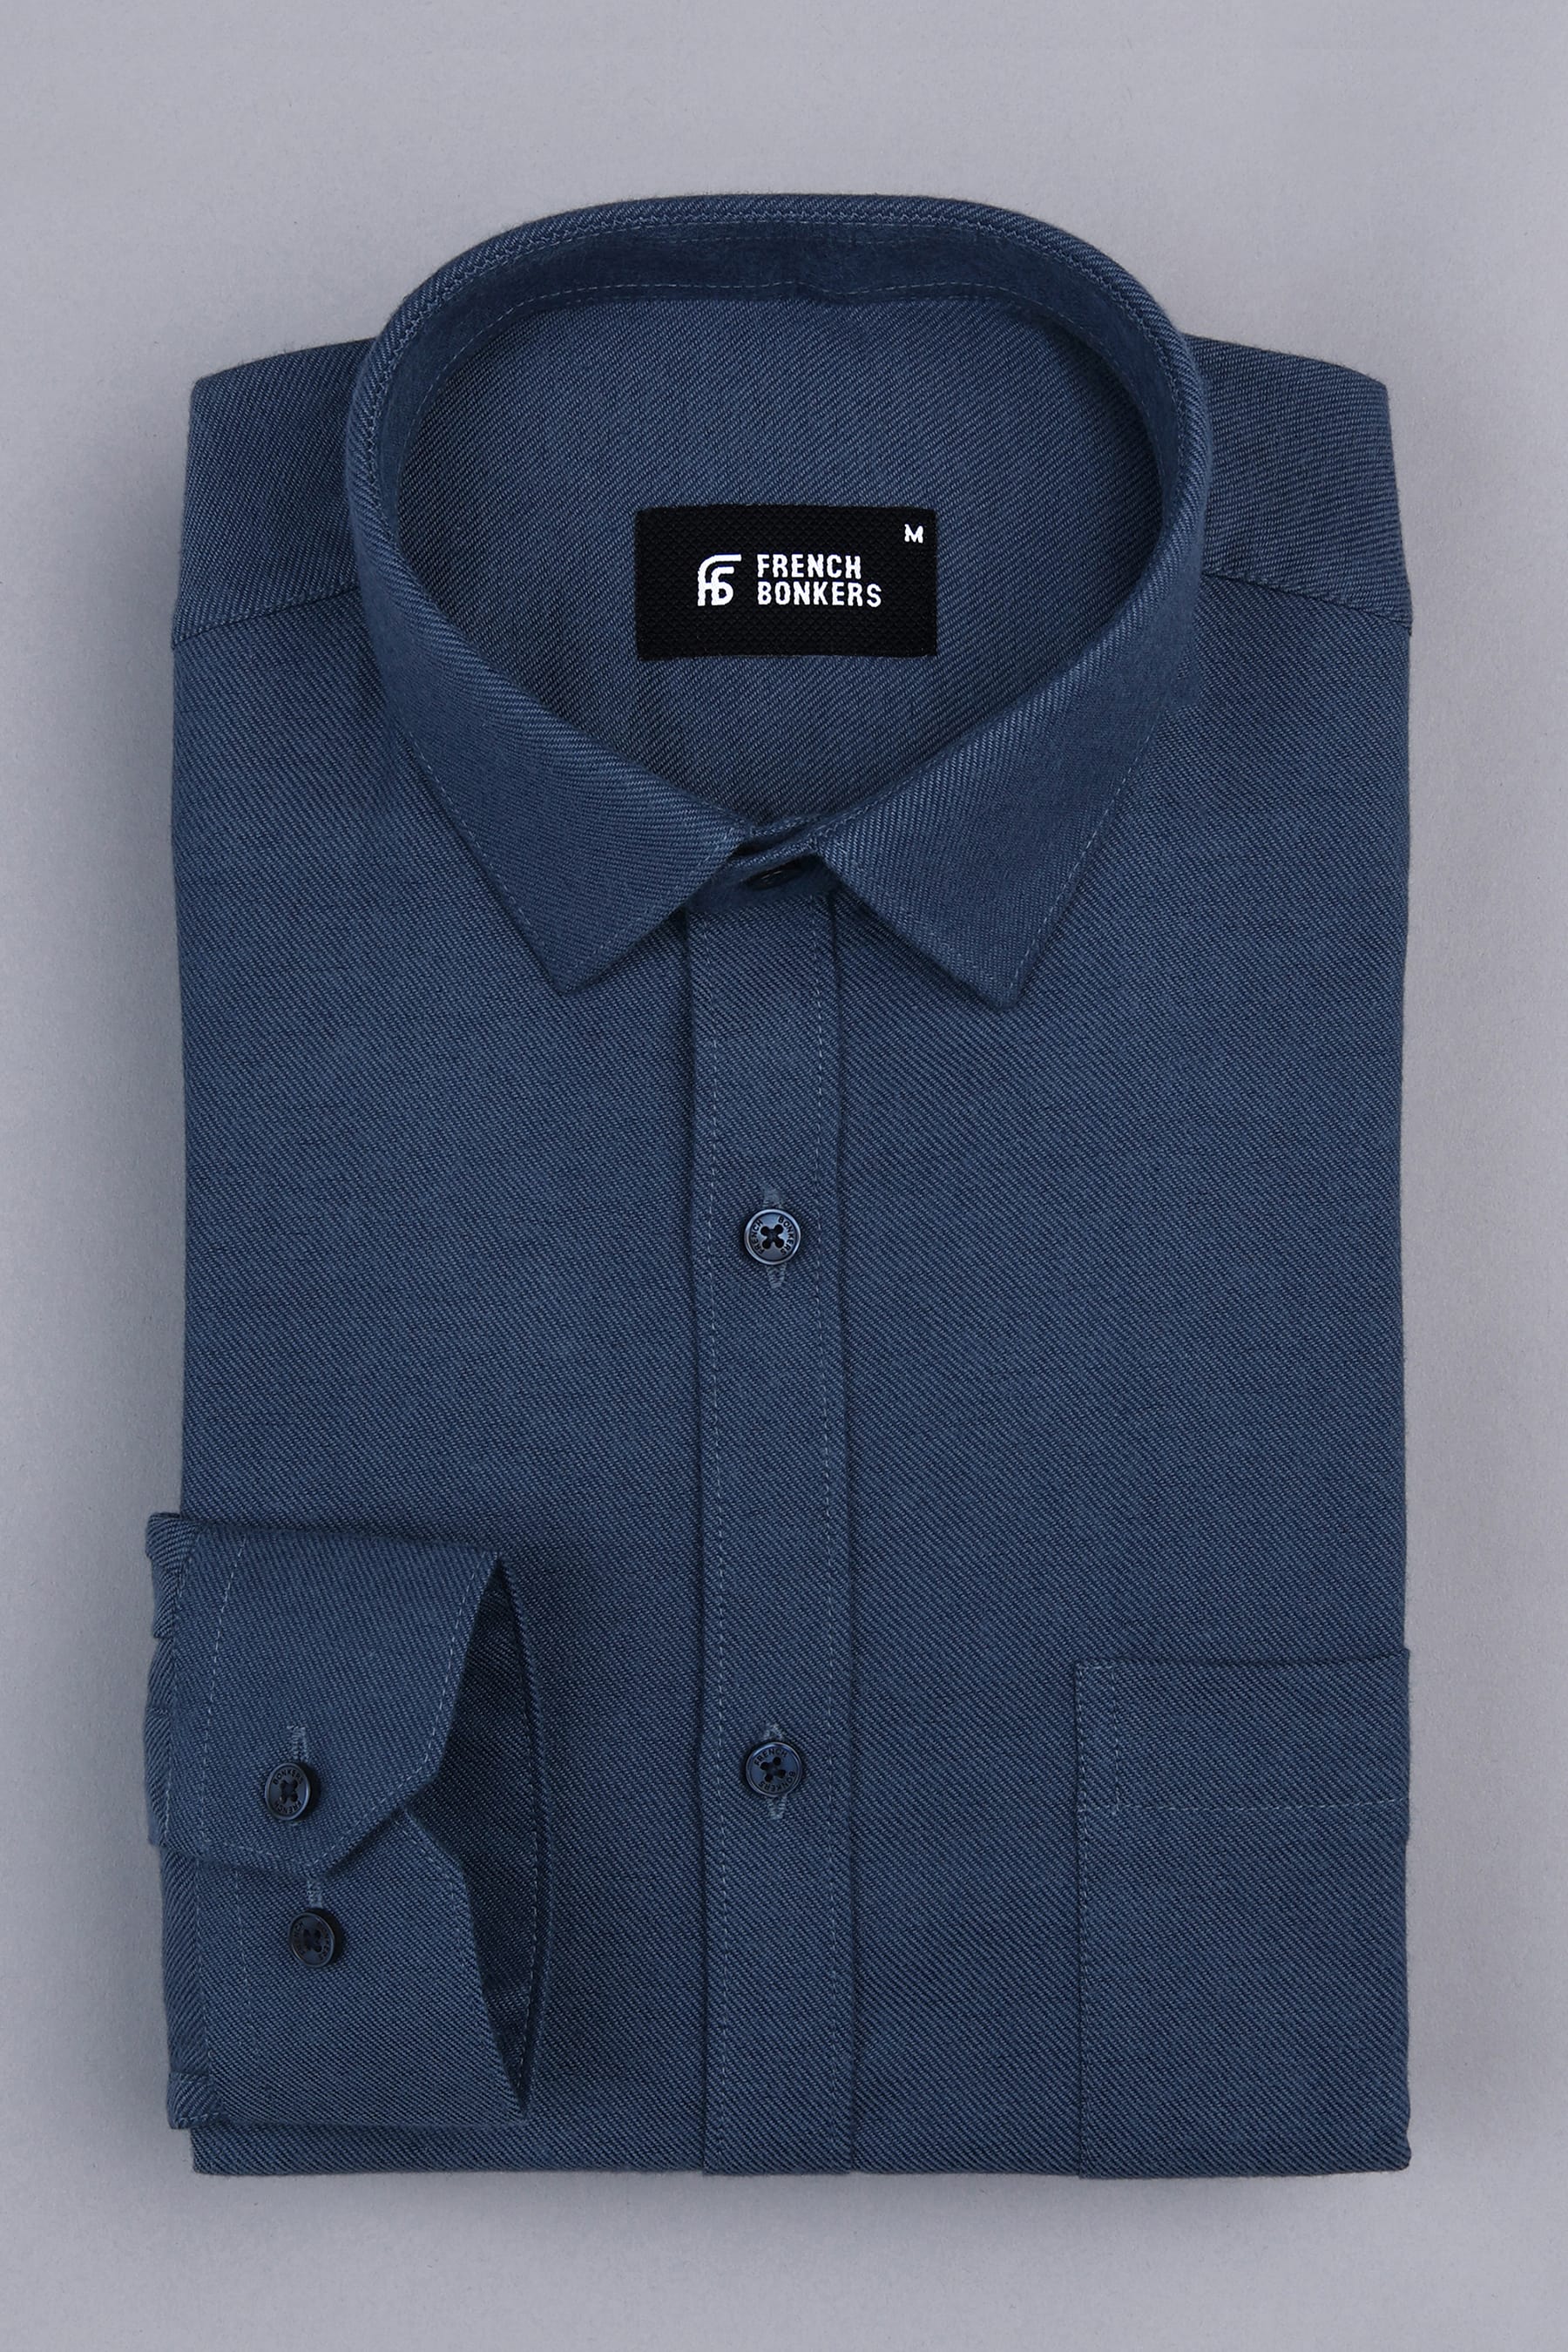 Peacock blue twill texture cotton shirt